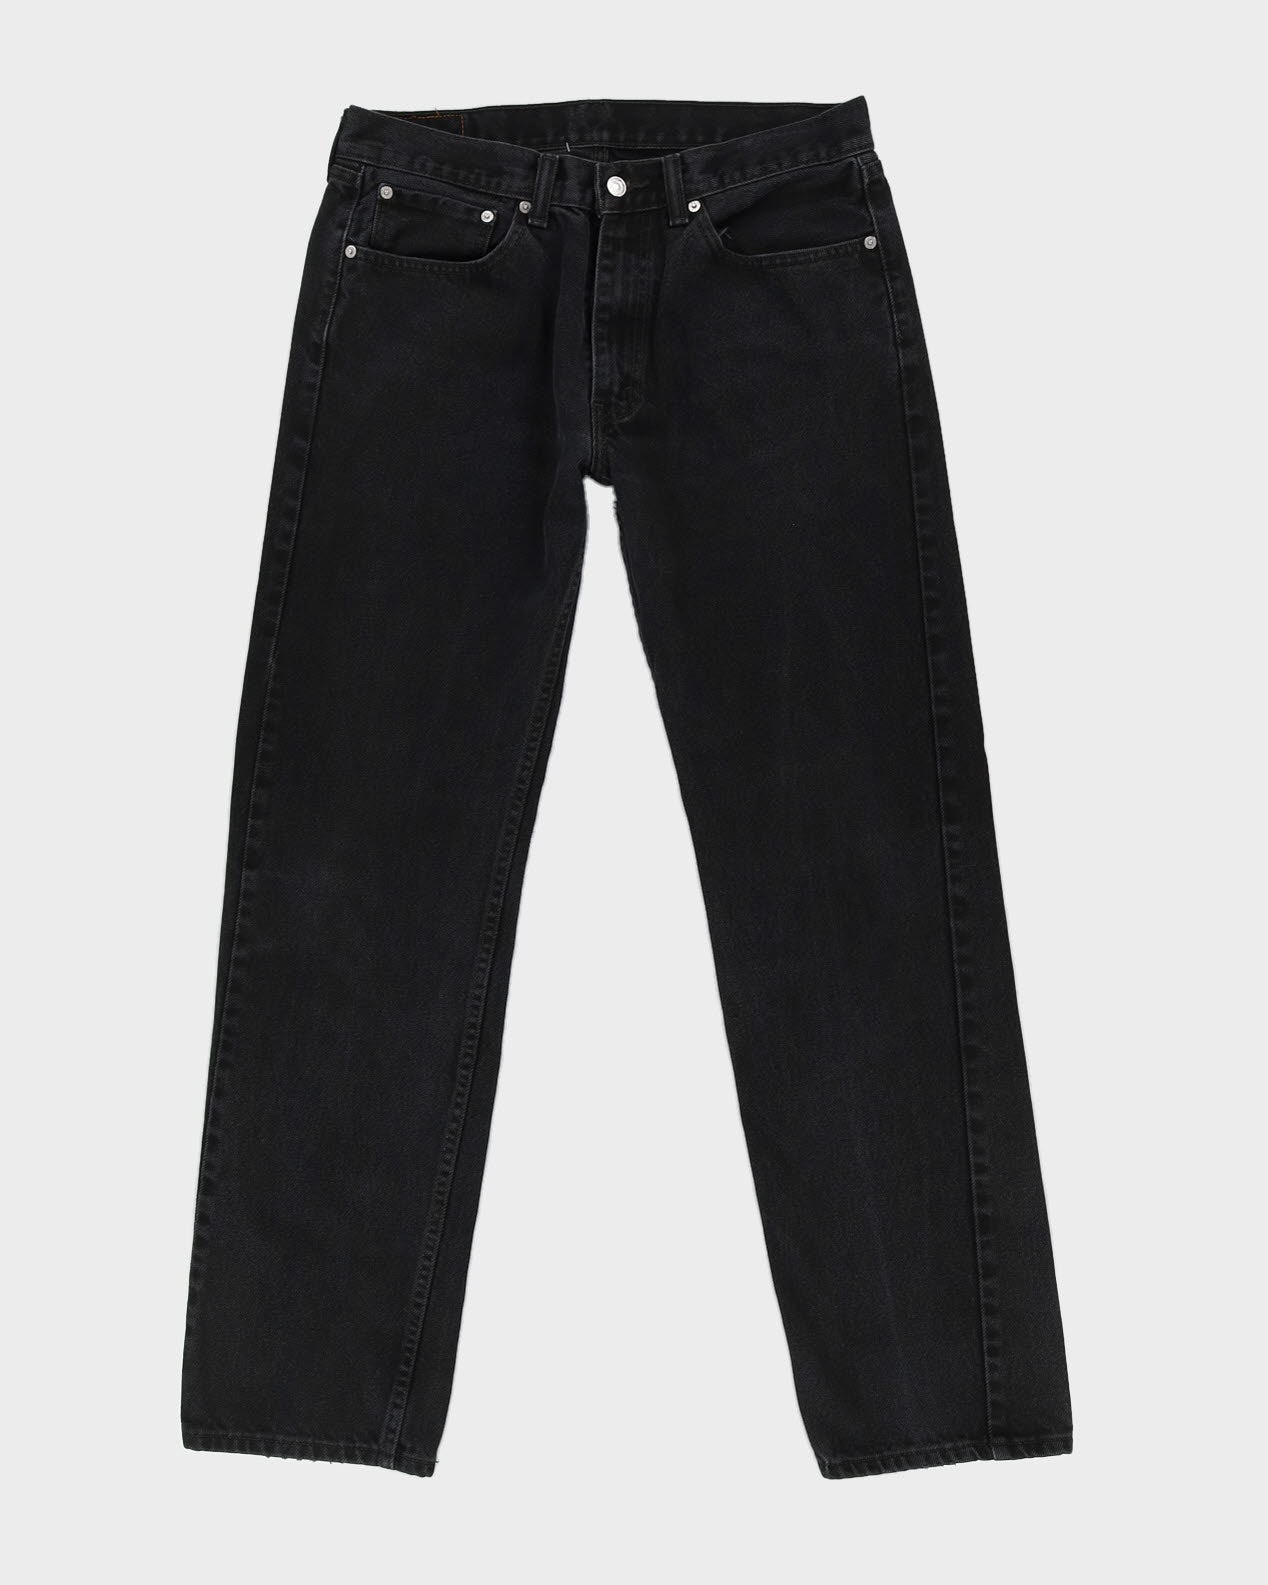 Levi's 505 Black Jeans - W34 L33